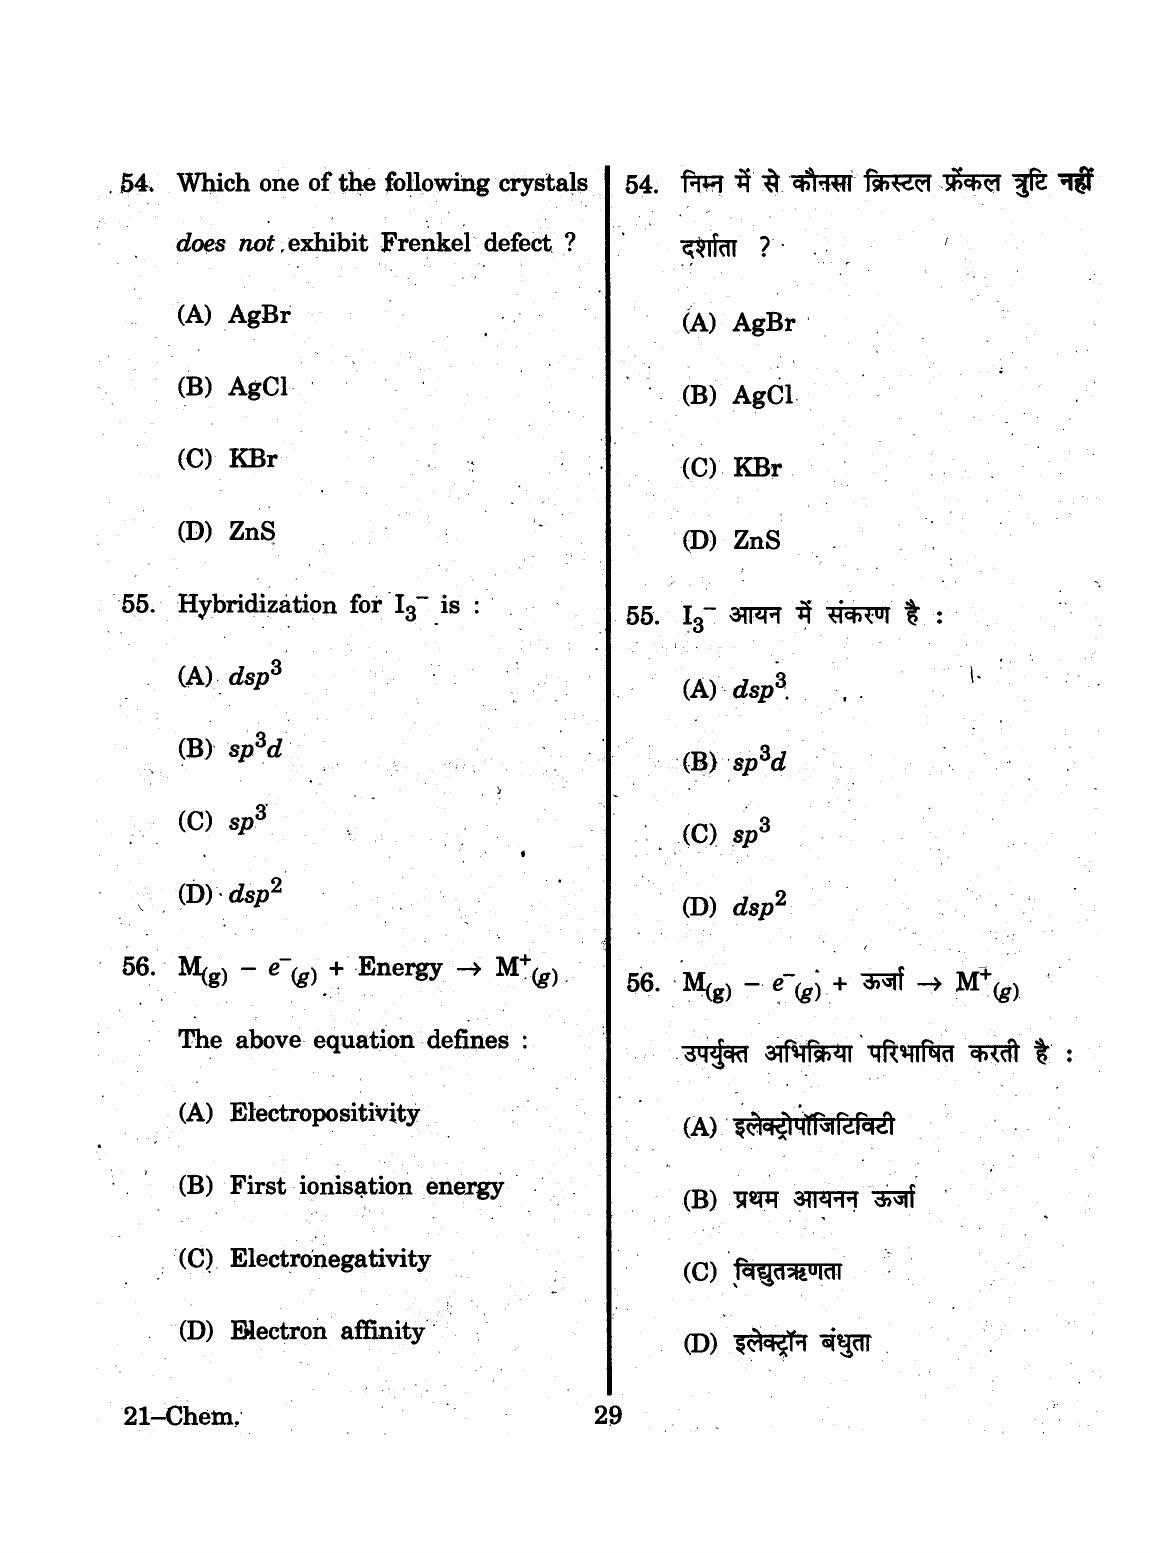 URATPG 2015 Chemisty Question Paper - Page 29